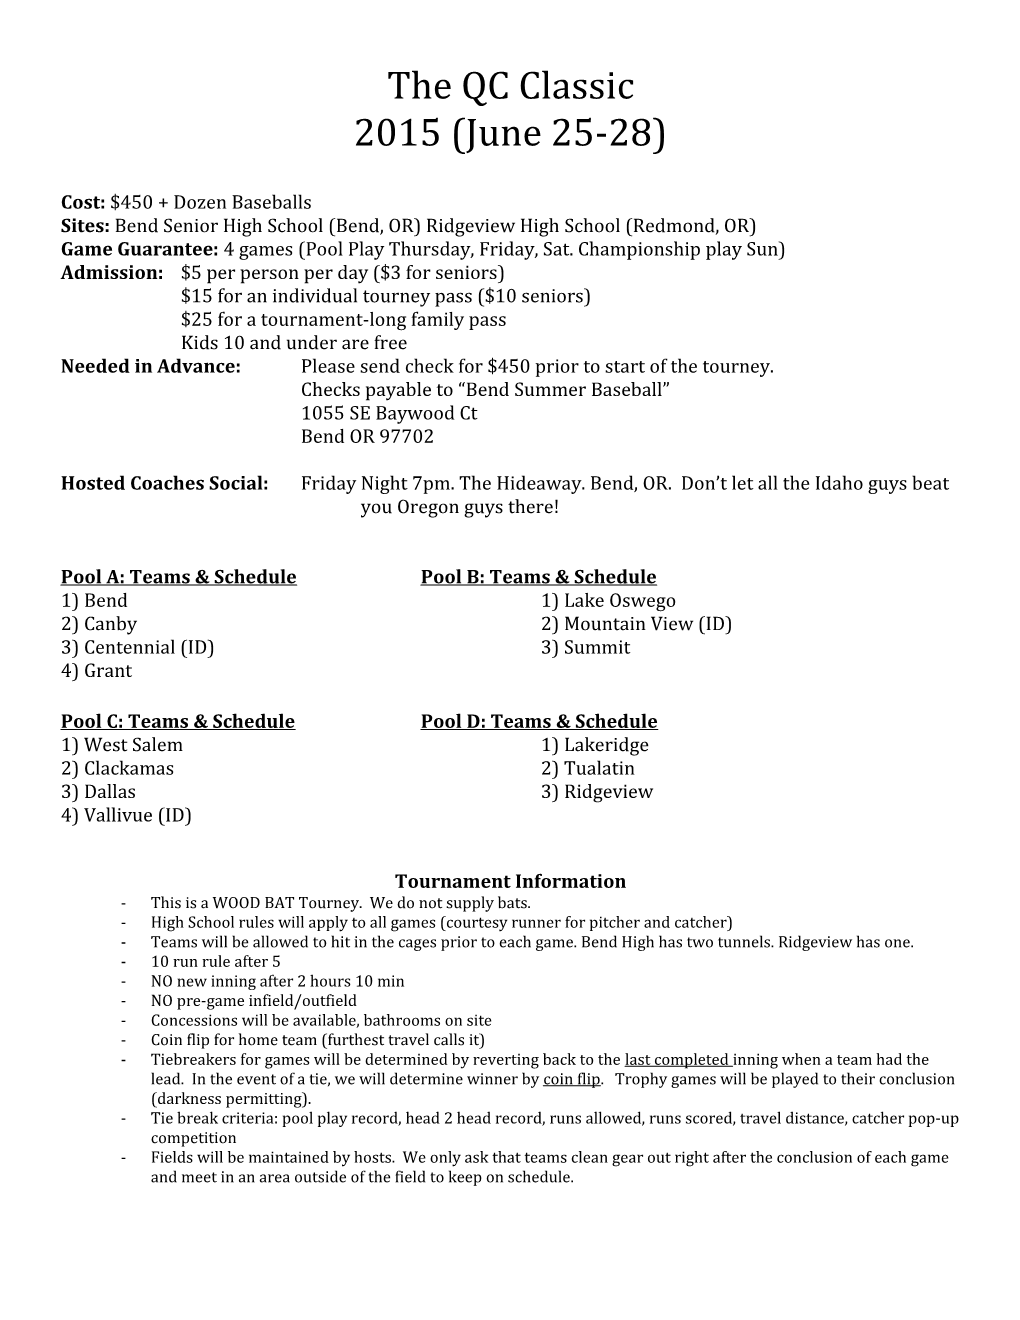 Sites:Bend Senior High School (Bend, OR) Ridgeview High School (Redmond, OR)